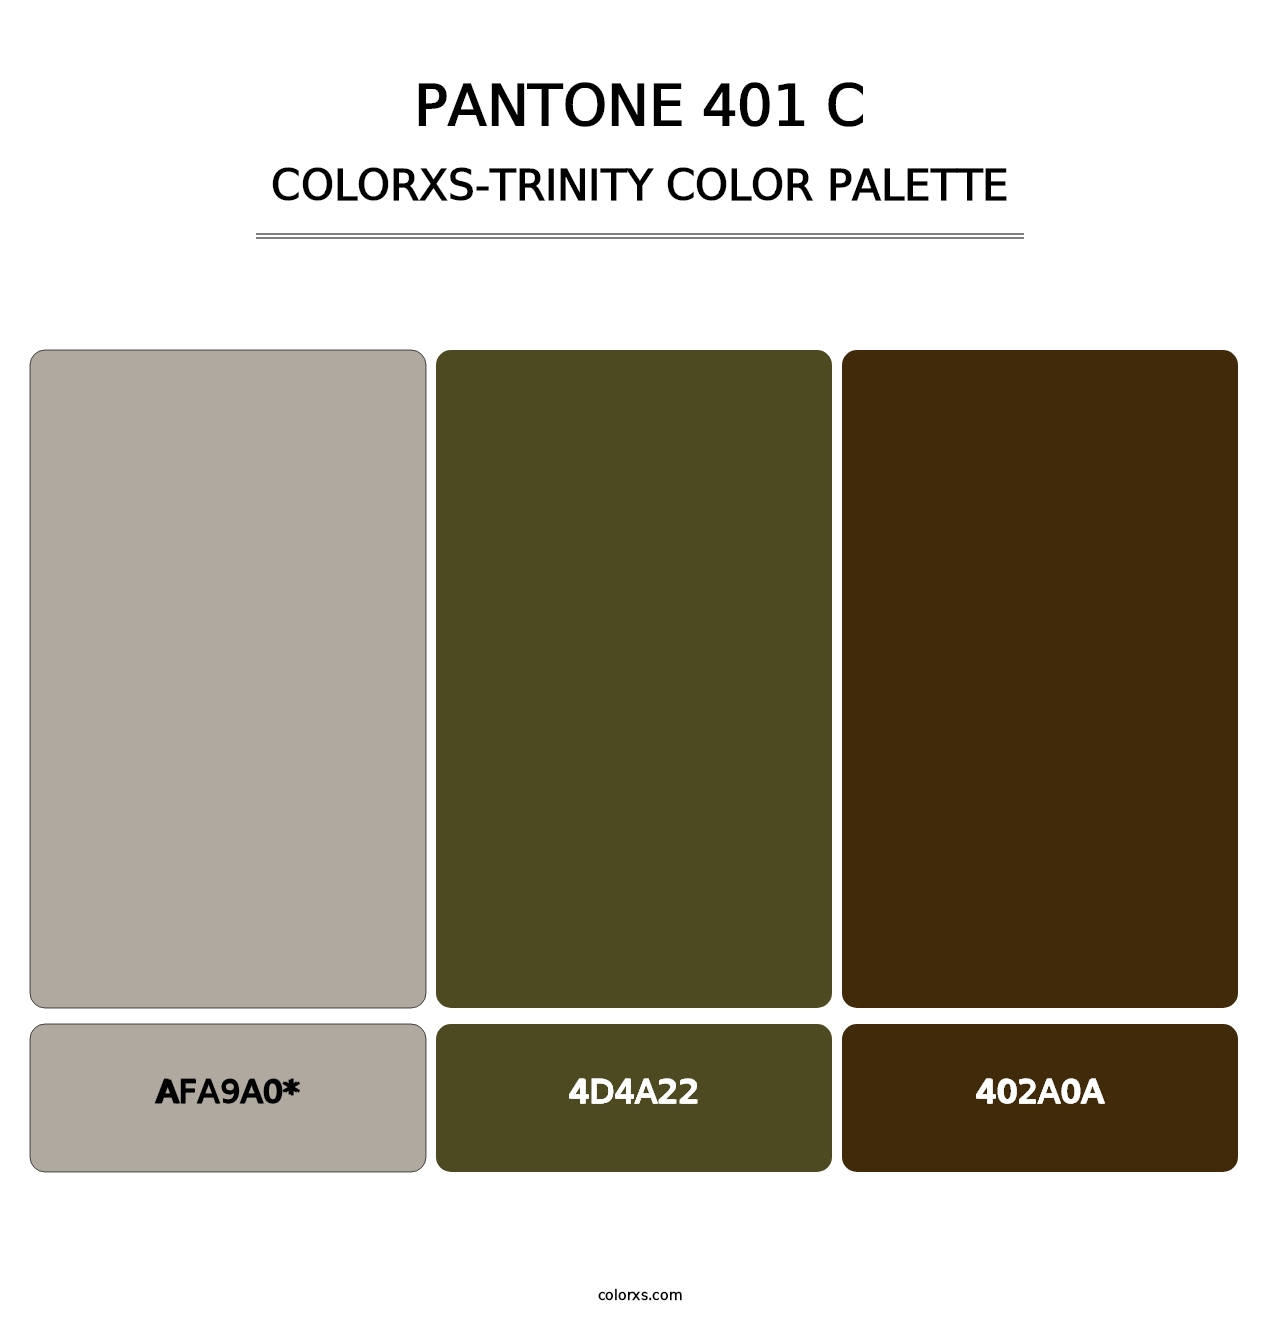 PANTONE 401 C - Colorxs Trinity Palette